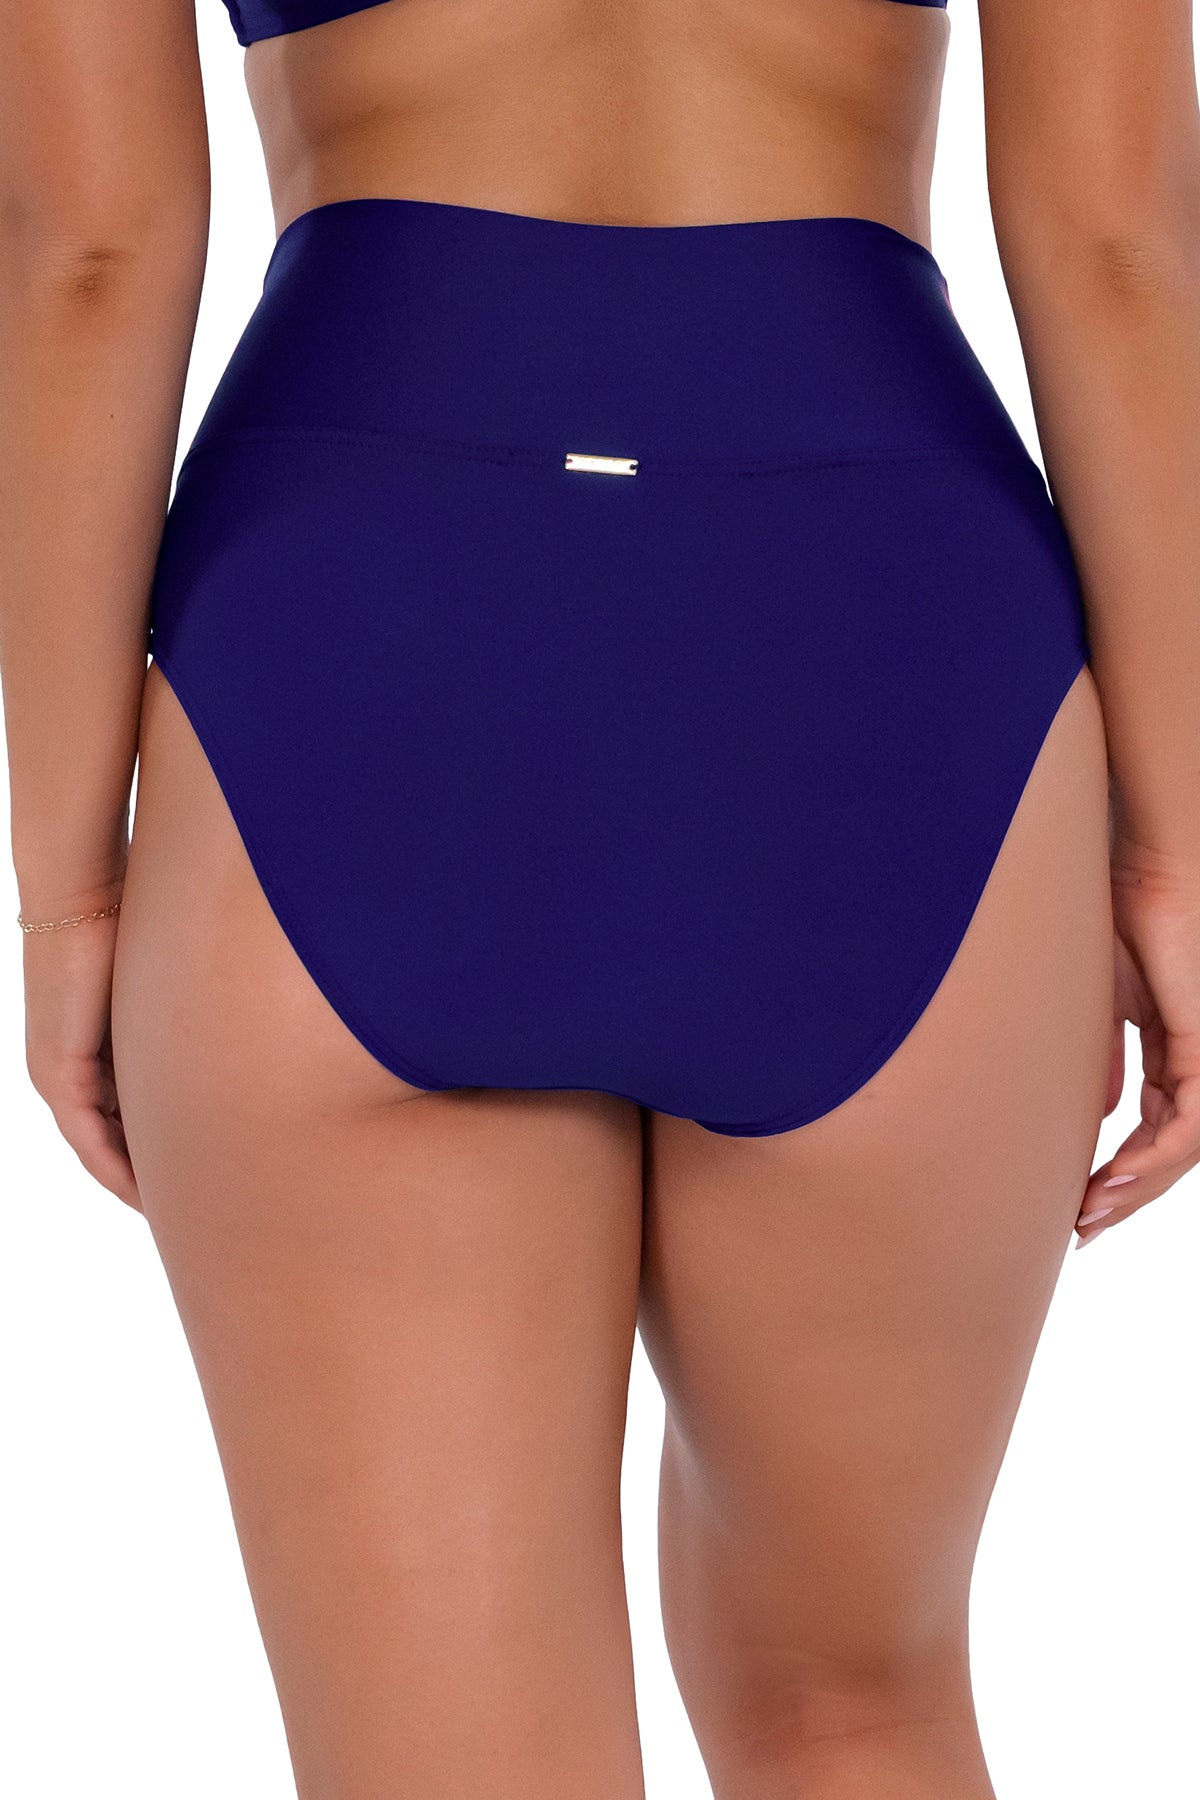 High waisted women's bikini bottom with yoga band #47H sizes 4-22